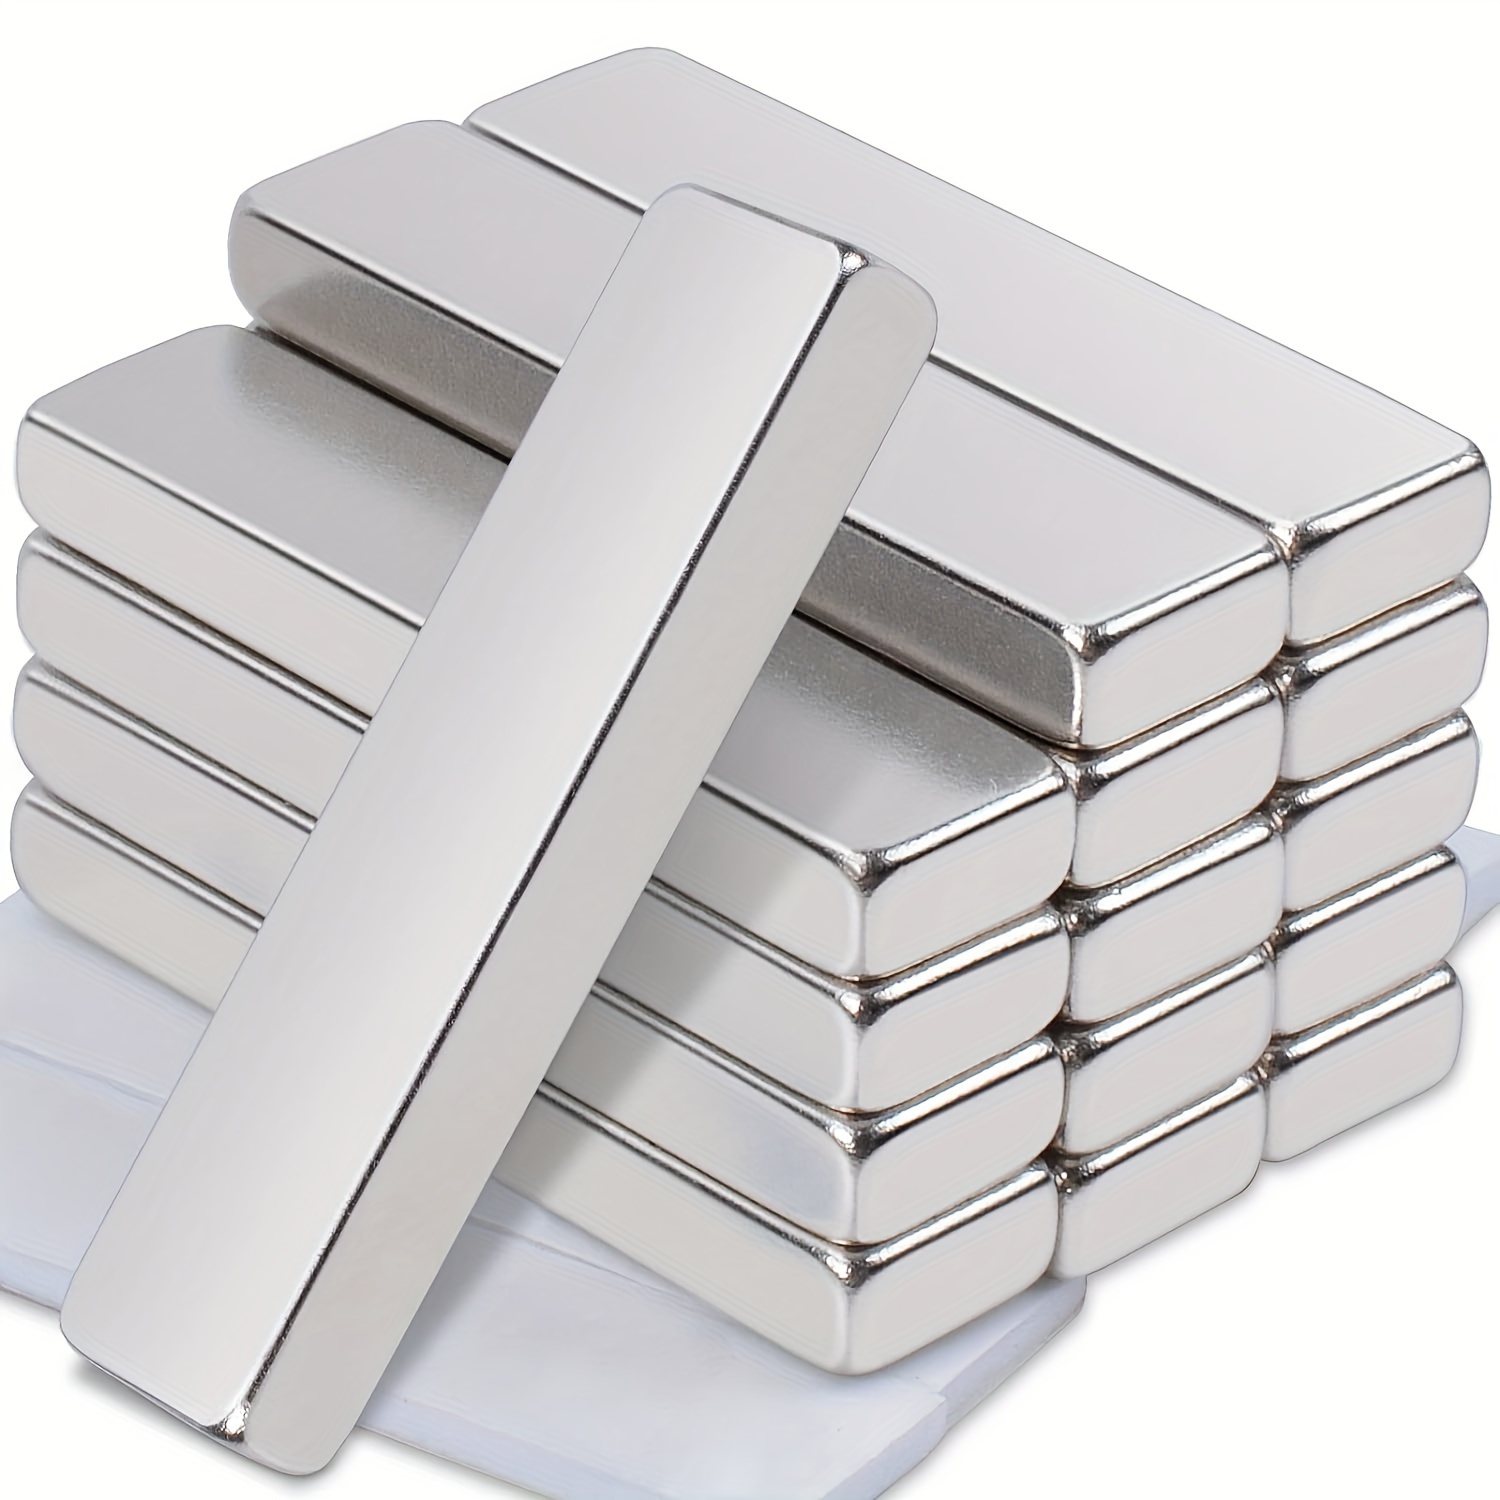 

14-pack Heavy-duty Neodymium Magnet Bars, 40x10x5mm - Versatile & Powerful For Kitchen, Garage Organization & Tool Storage